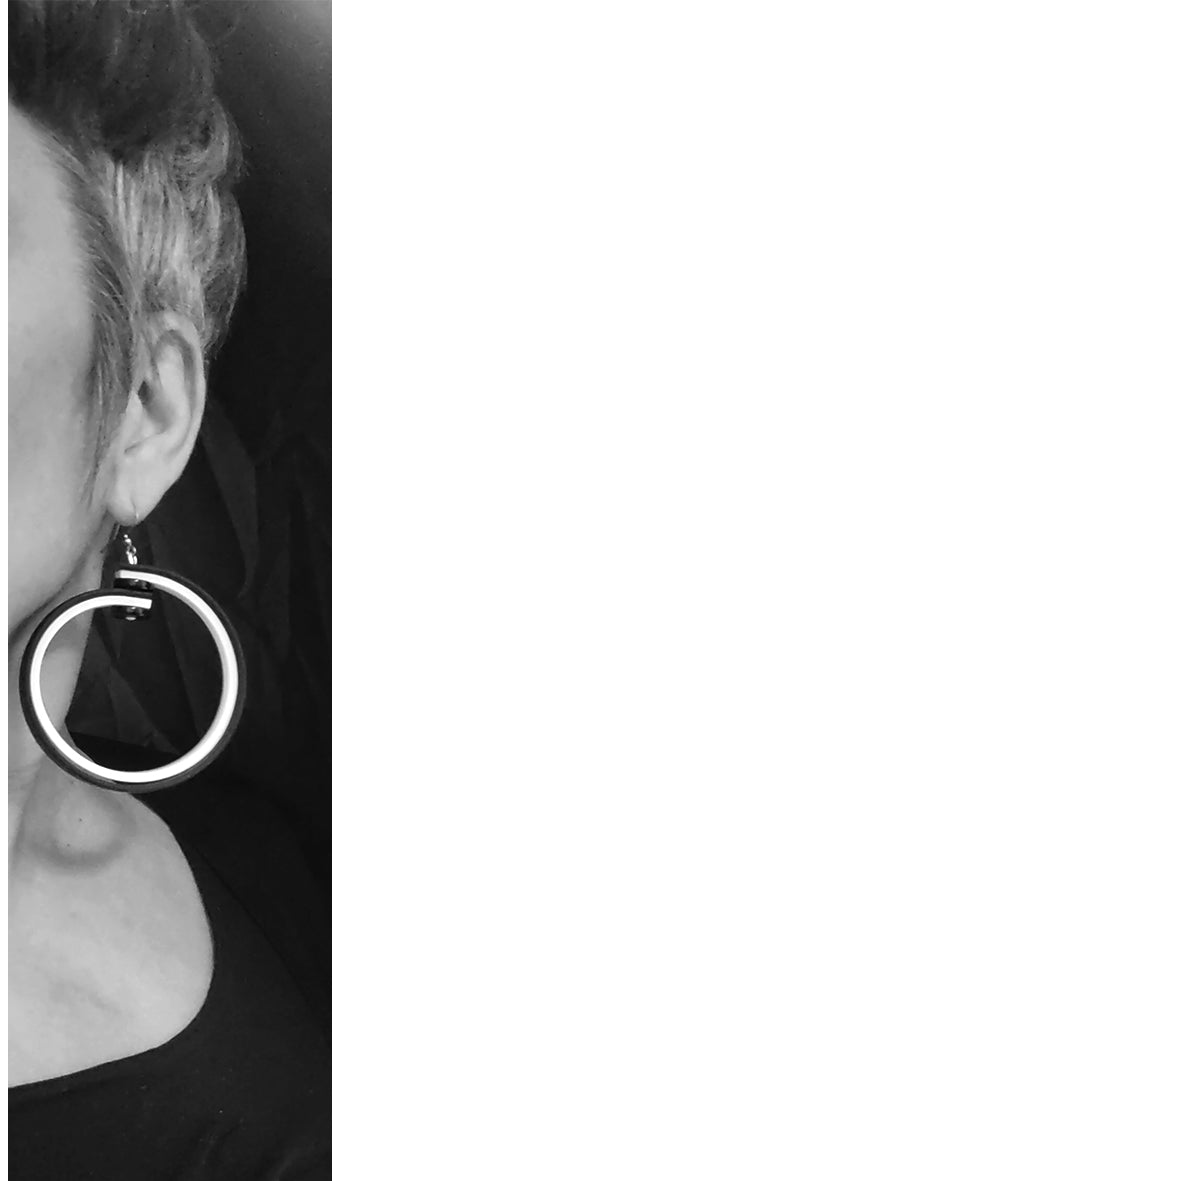 TESSA hoop earrings Black & White